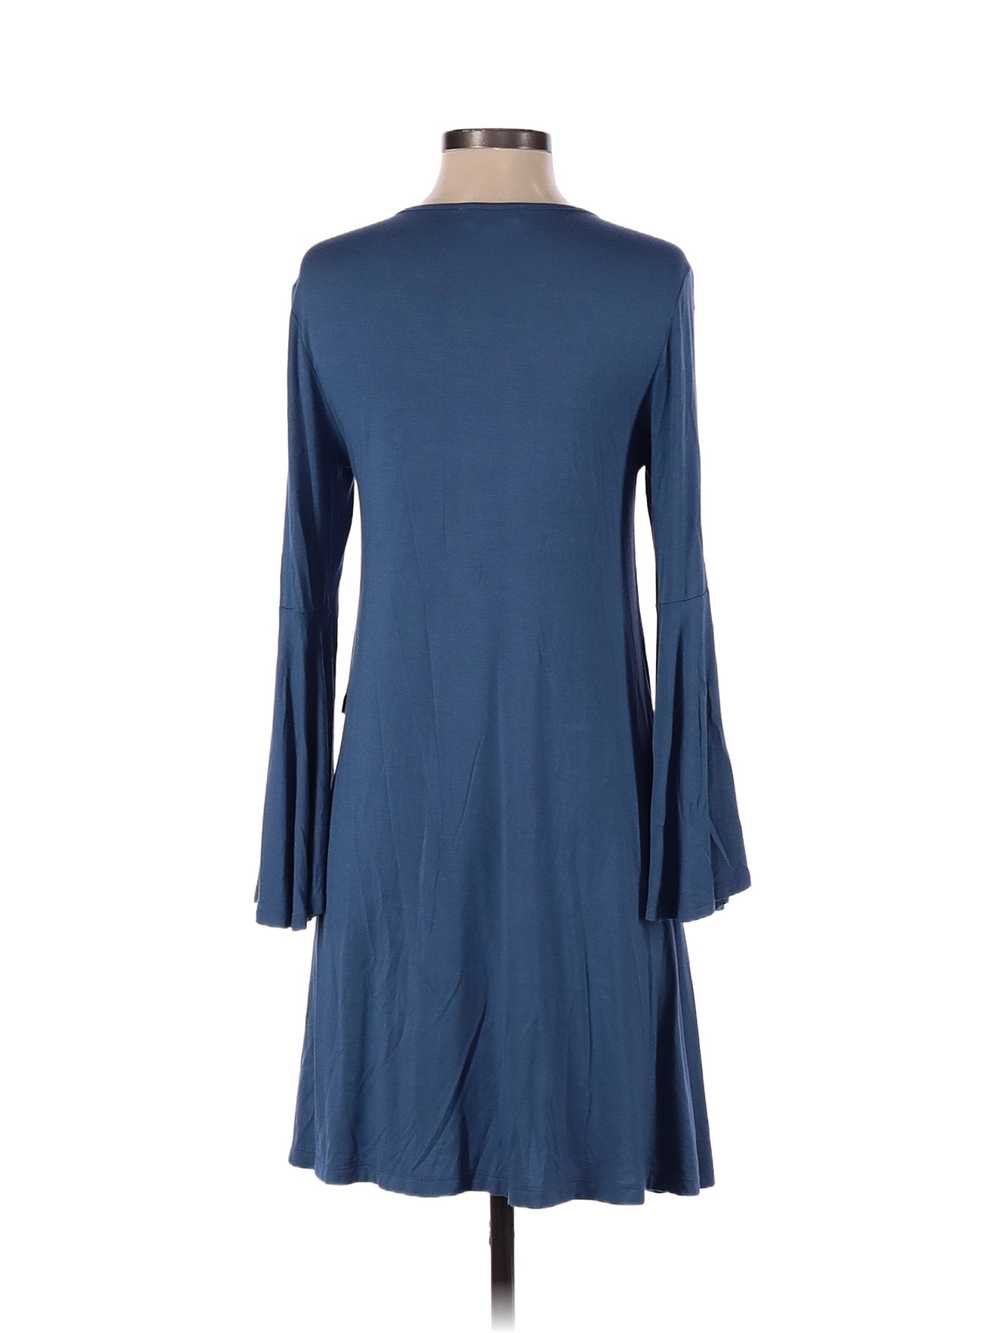 Neiman Marcus Women Blue Casual Dress S - image 2